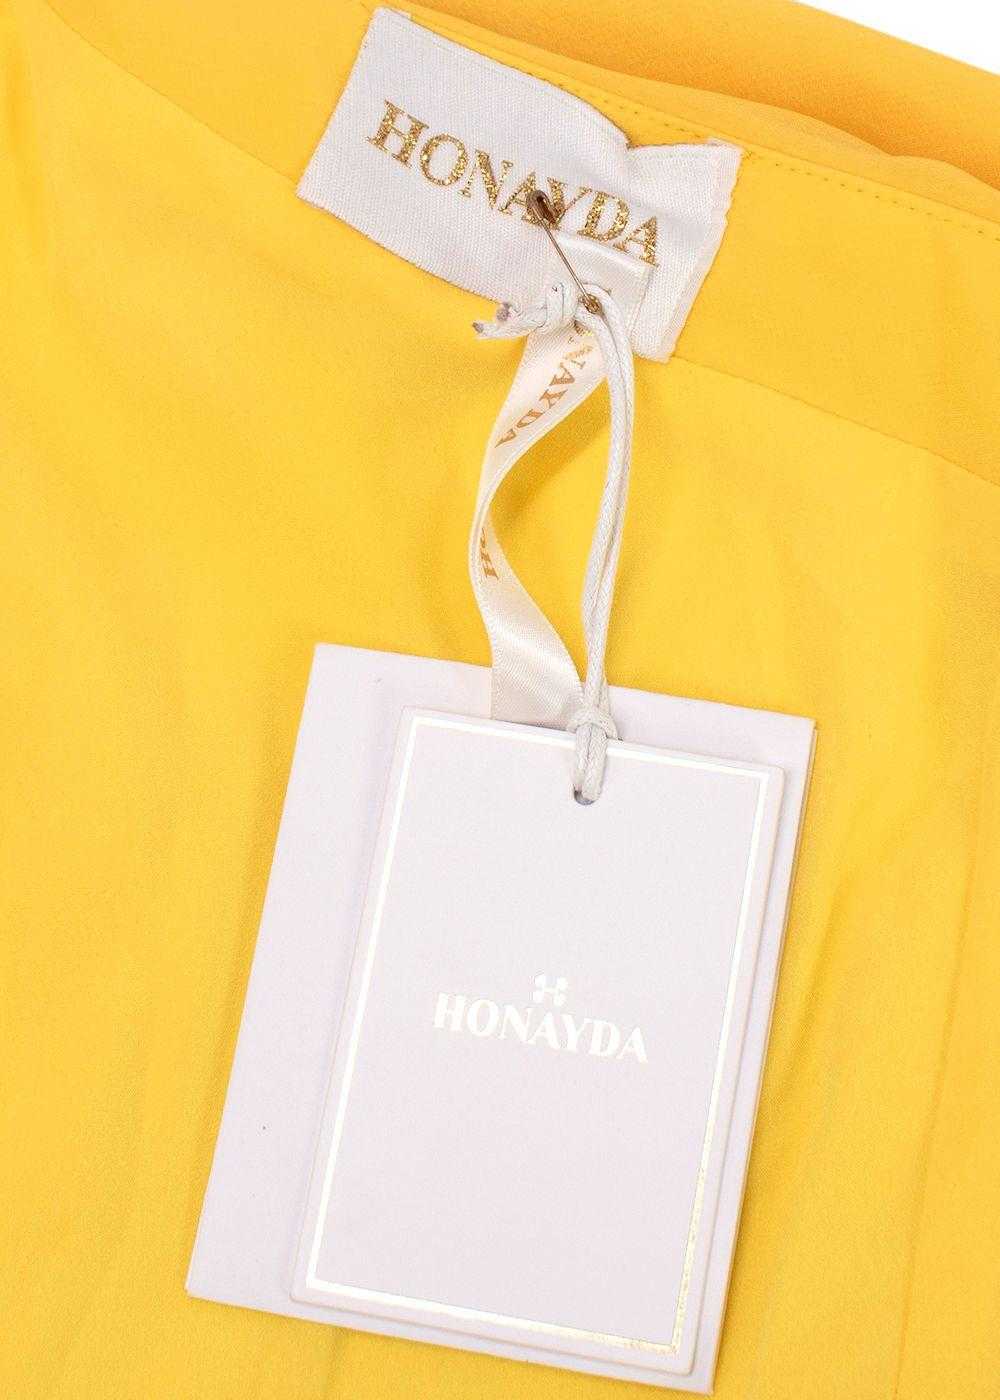 Honayda Honayda Yellow Asymmetric Ruffled Gown - image 5